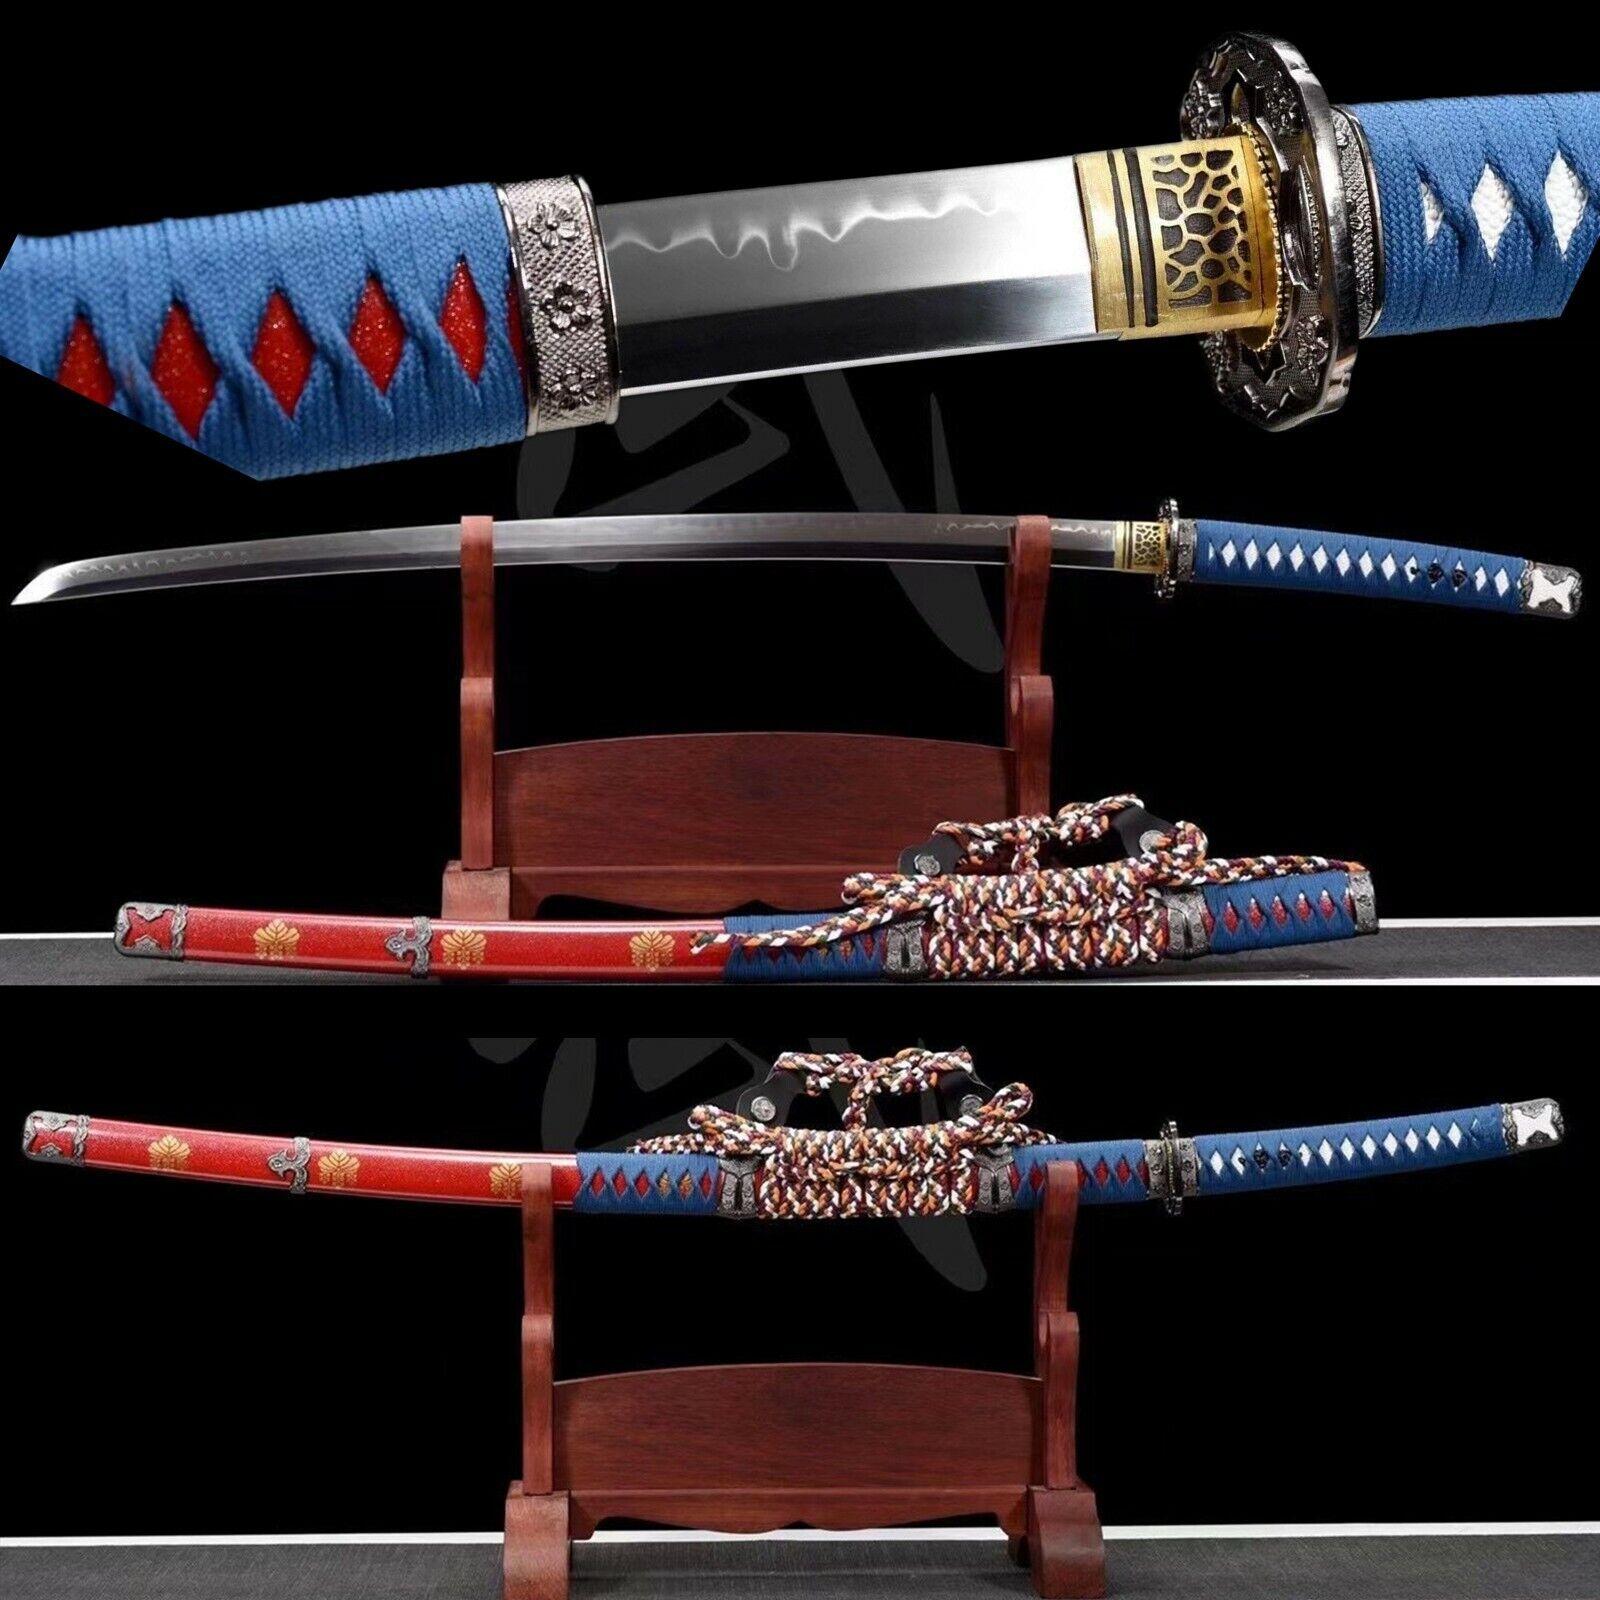 Clay Tempered T10 Steel Japanese Samurai Tachi  Sword officer Saber  Very Sharp